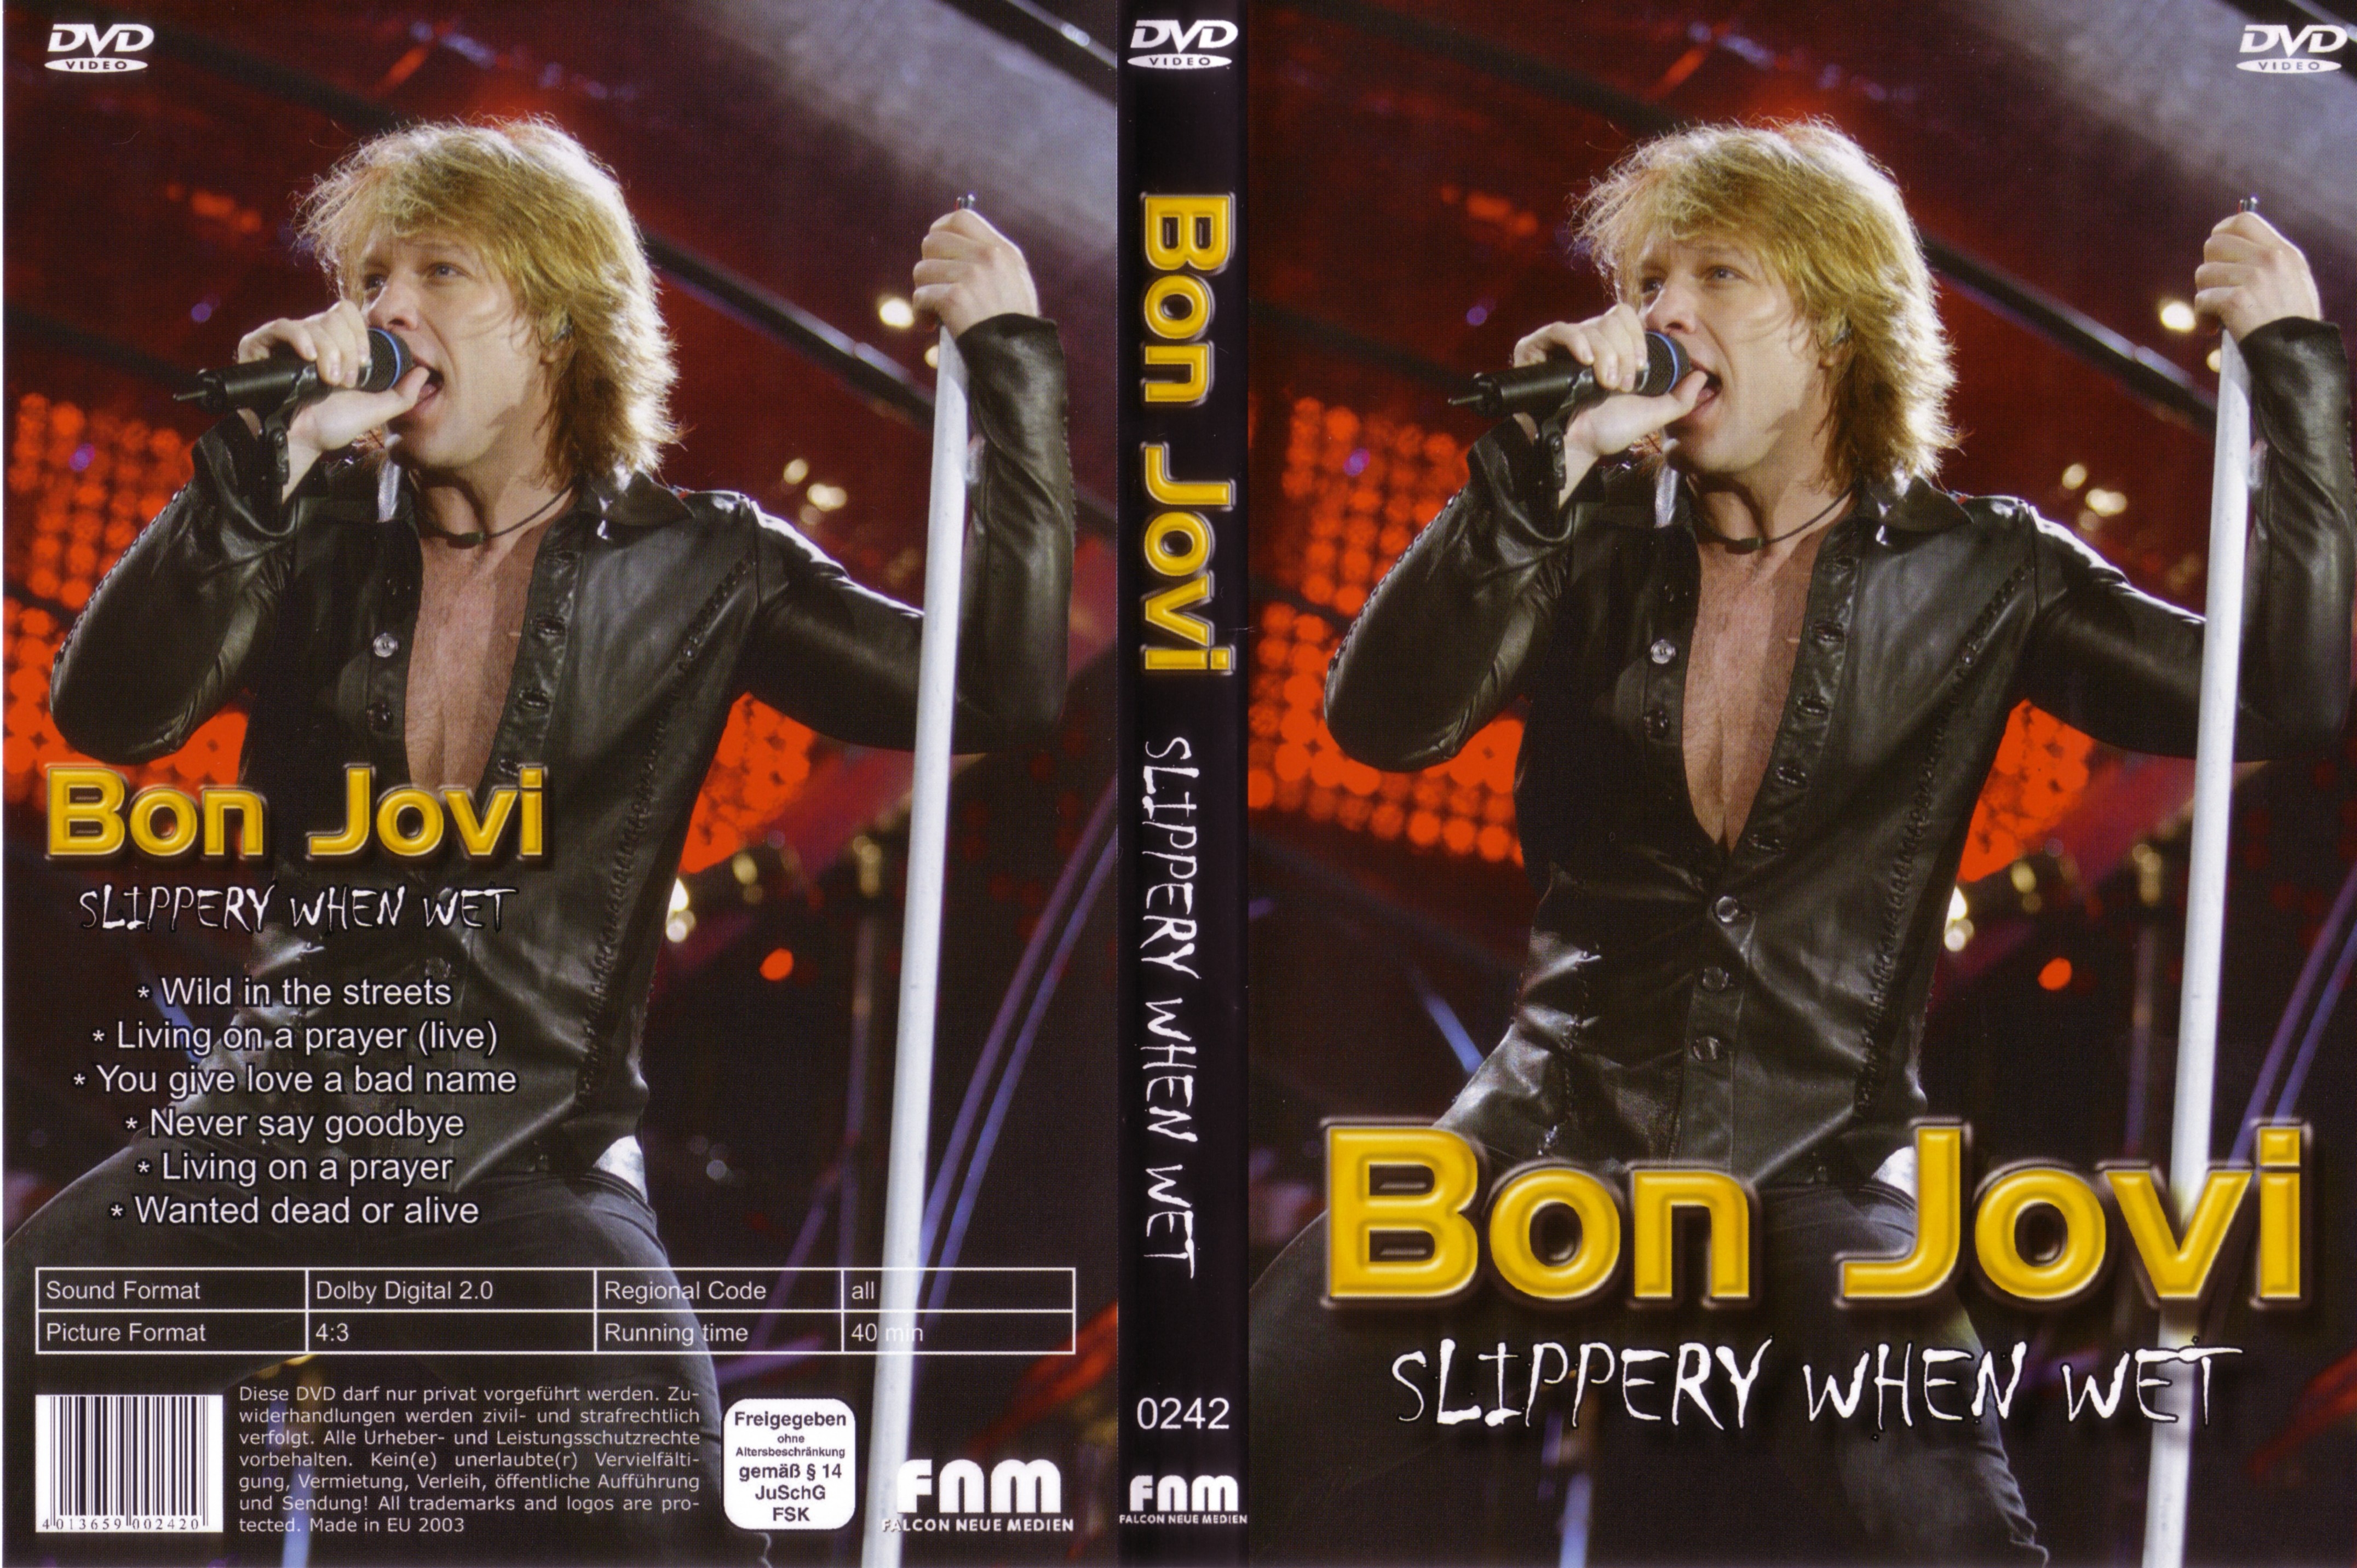 Jaquette DVD Bon jovi Slippery when wet